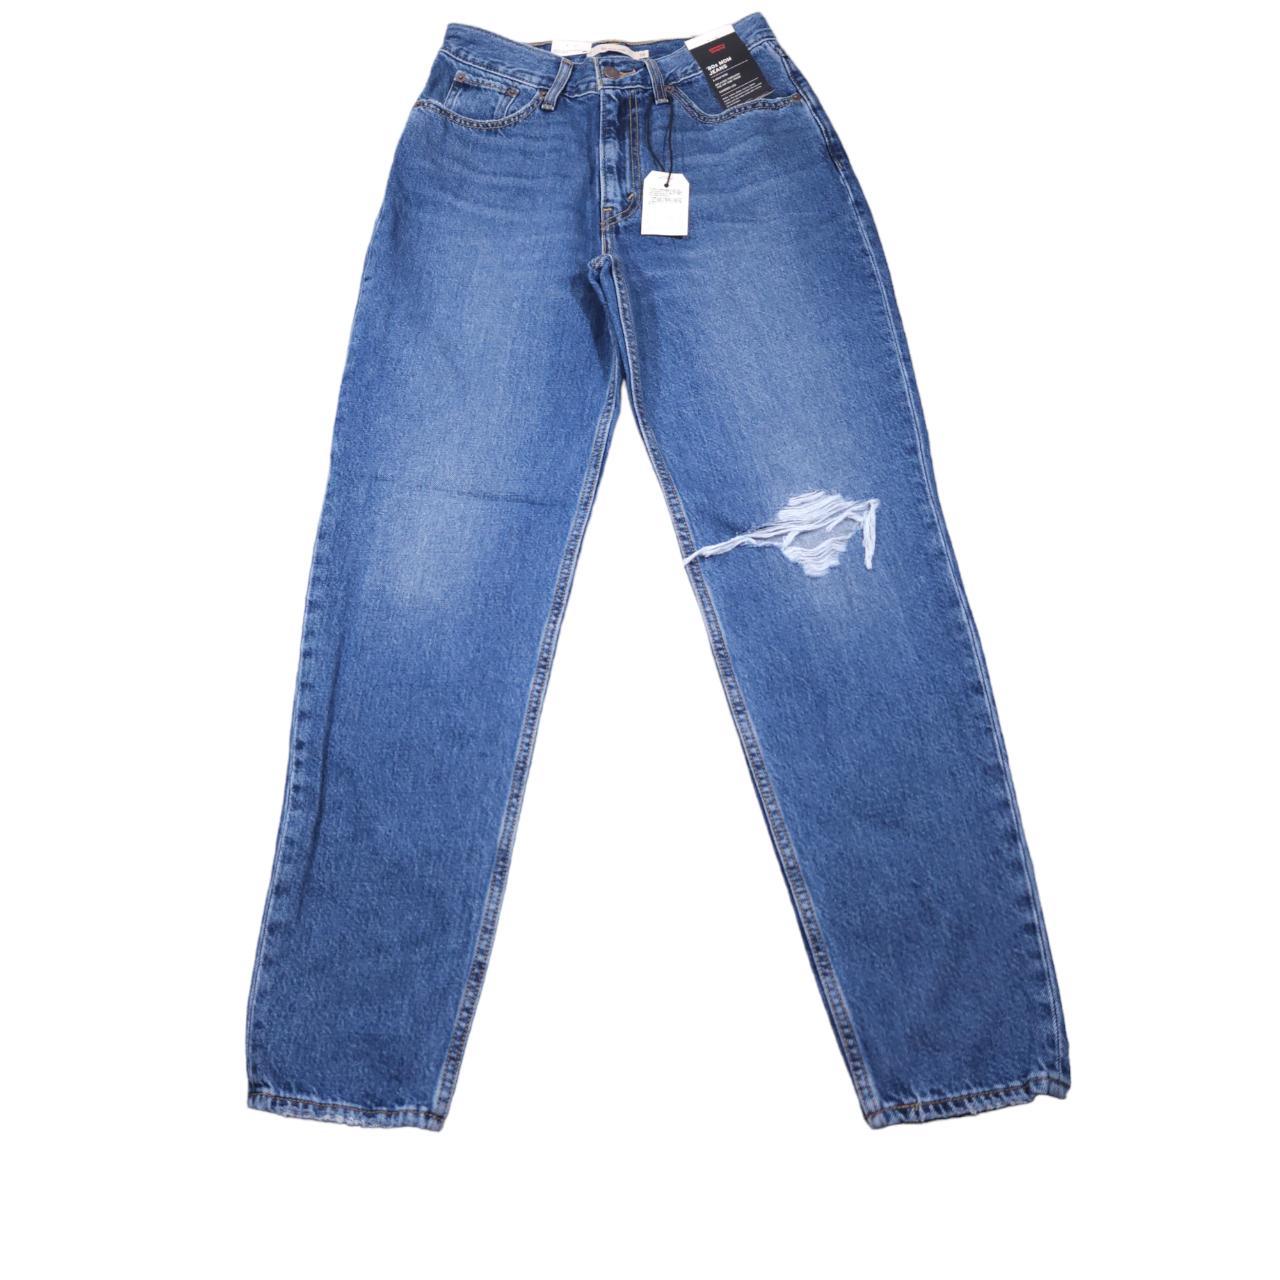 30 Waist Vintage 90s Levi's 501 Jeans Unisex Distressed Denim